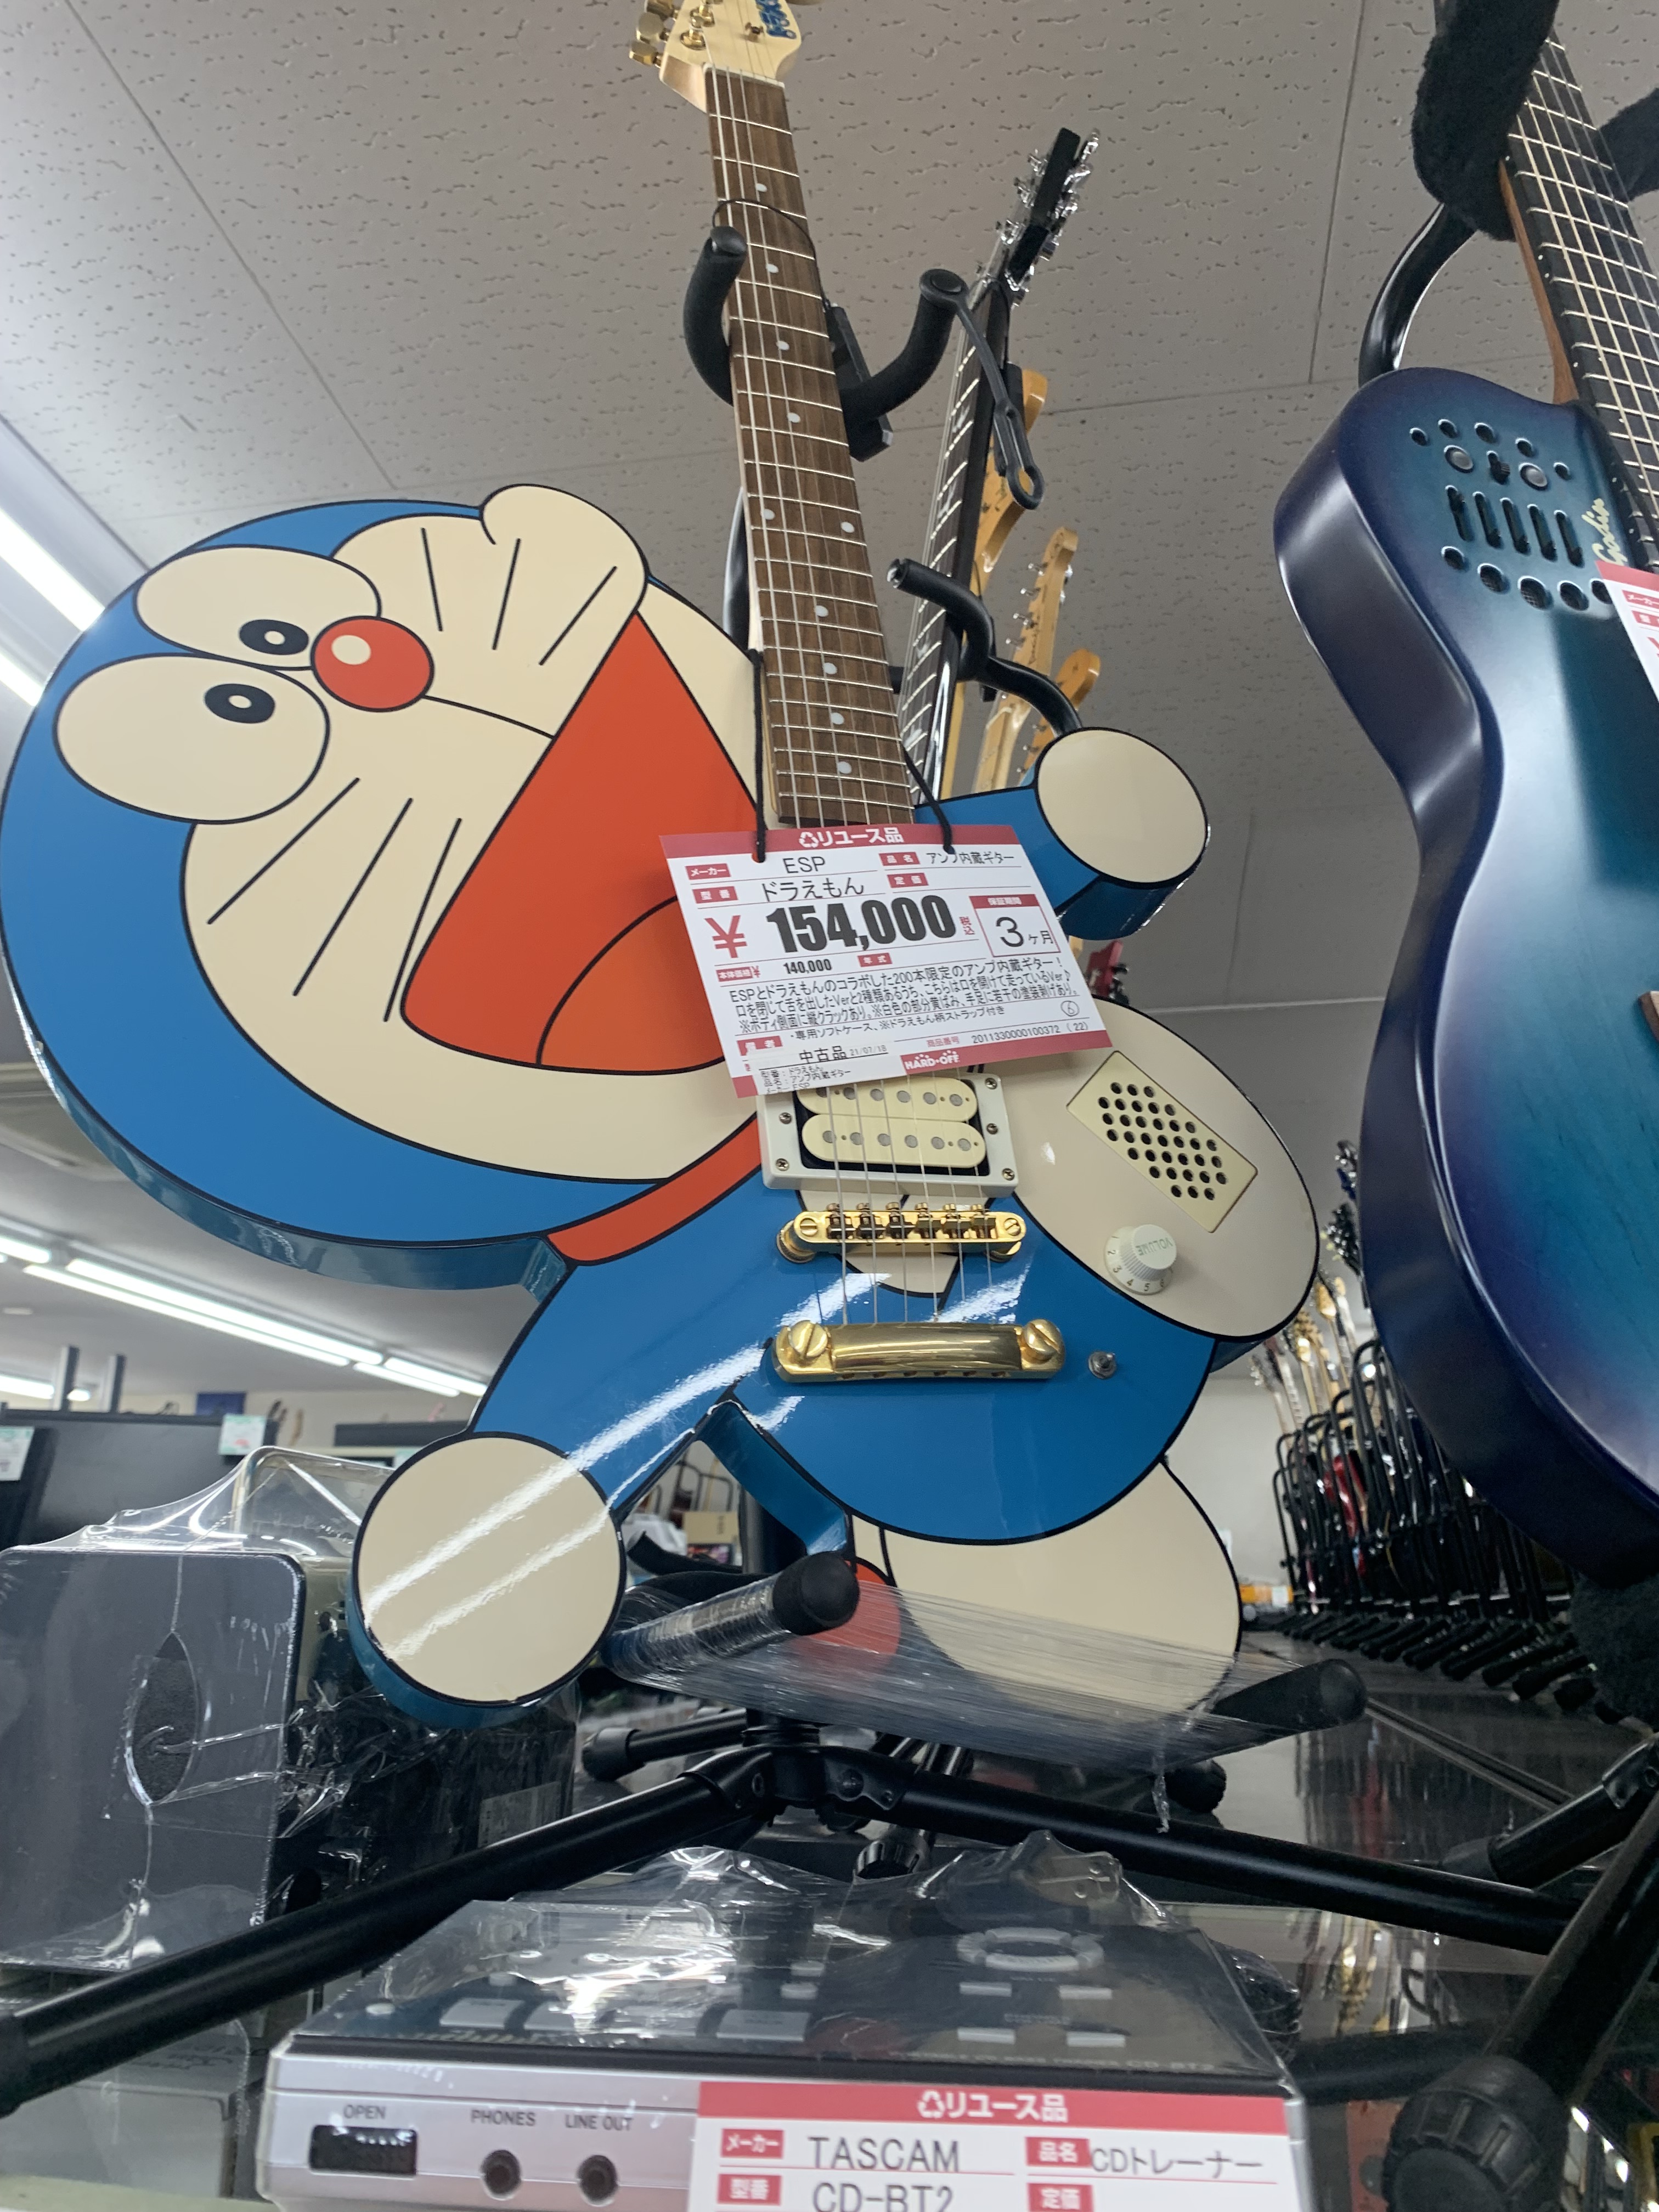 Doraemon animation-themed guitar. Photo by Denisse Rauda.